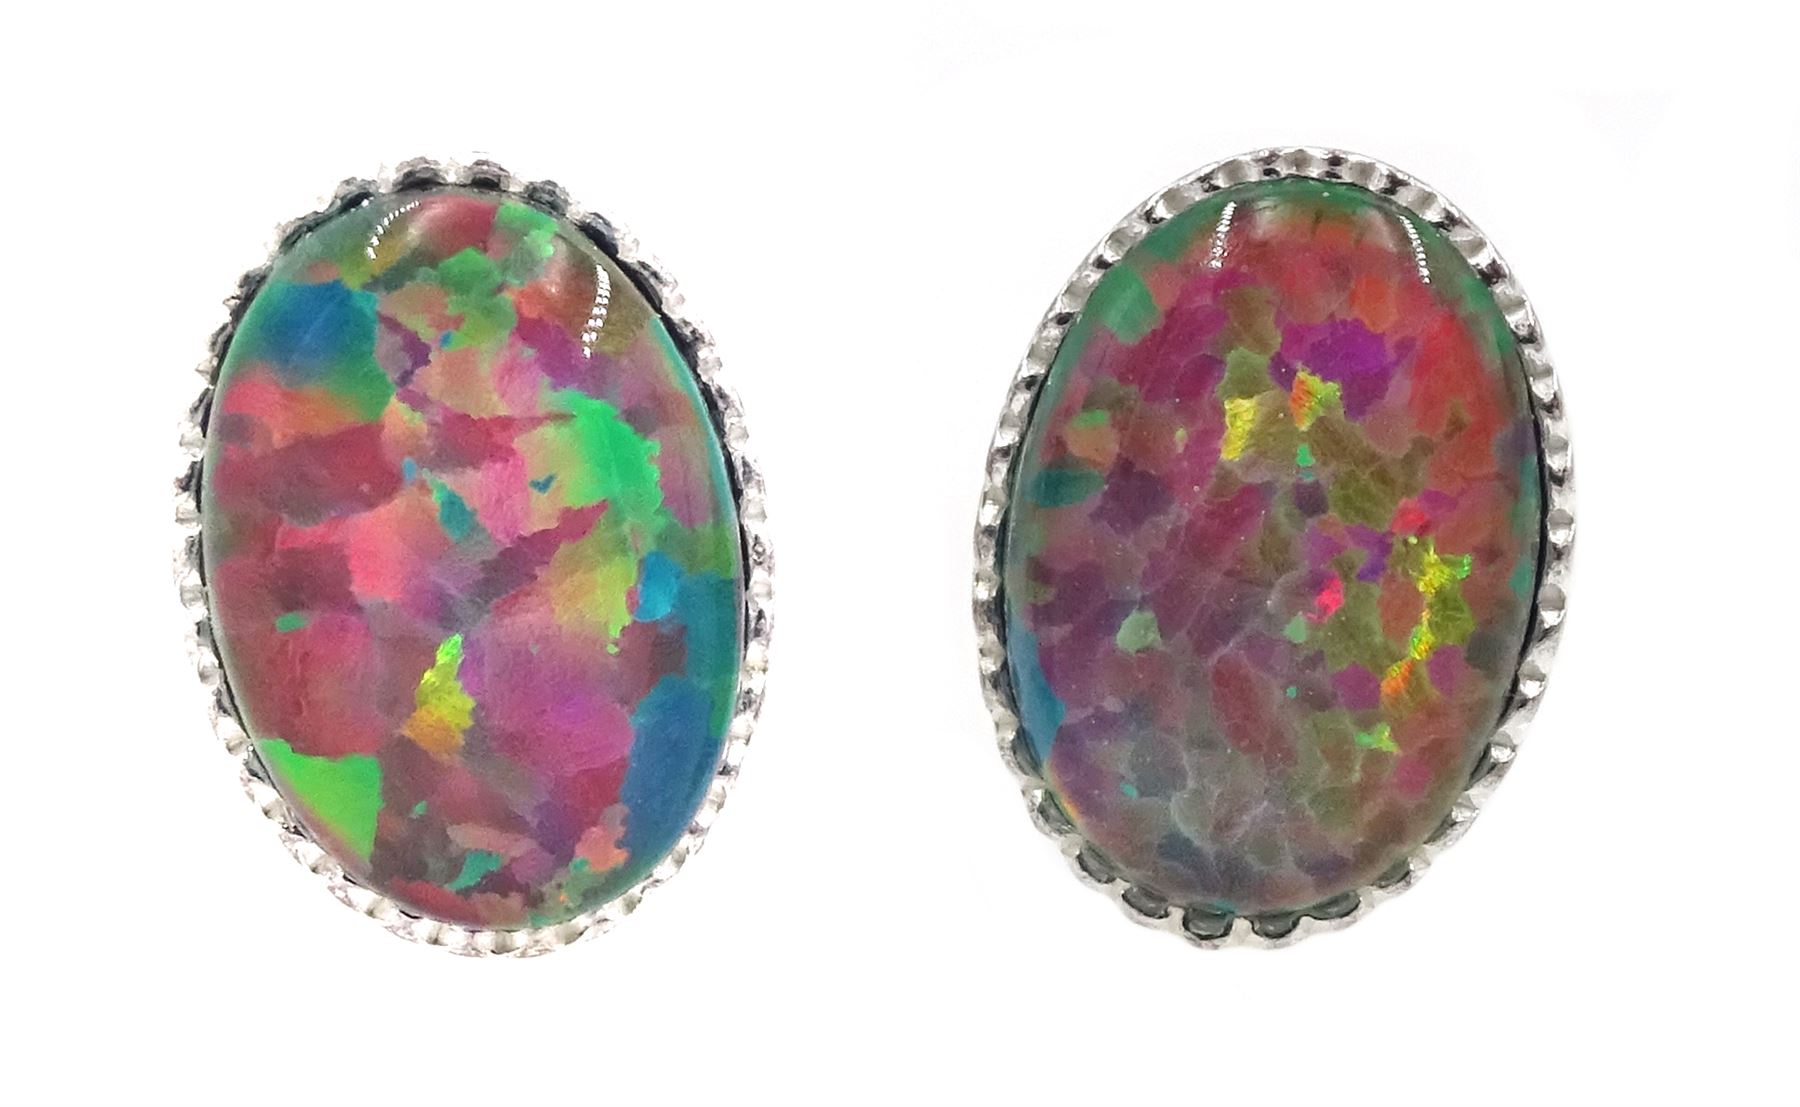 Pair of silver oval opal stud earrings